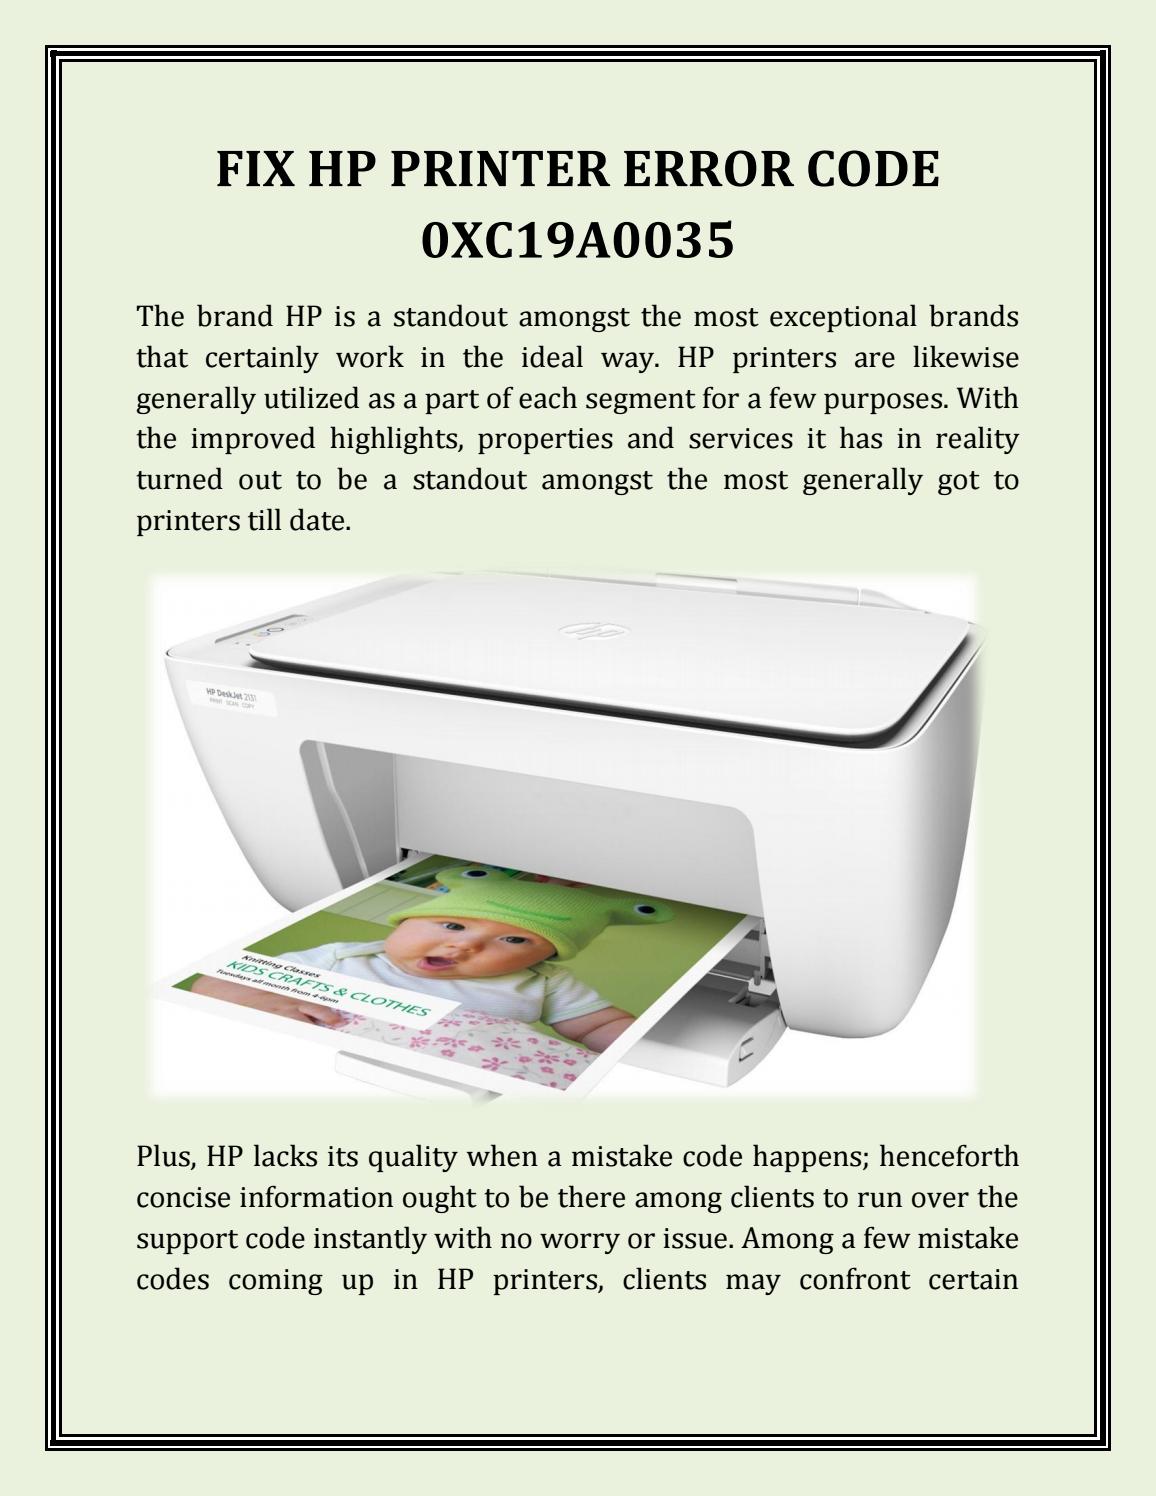 code d'erreur de l'imprimante hp oxc19a0035